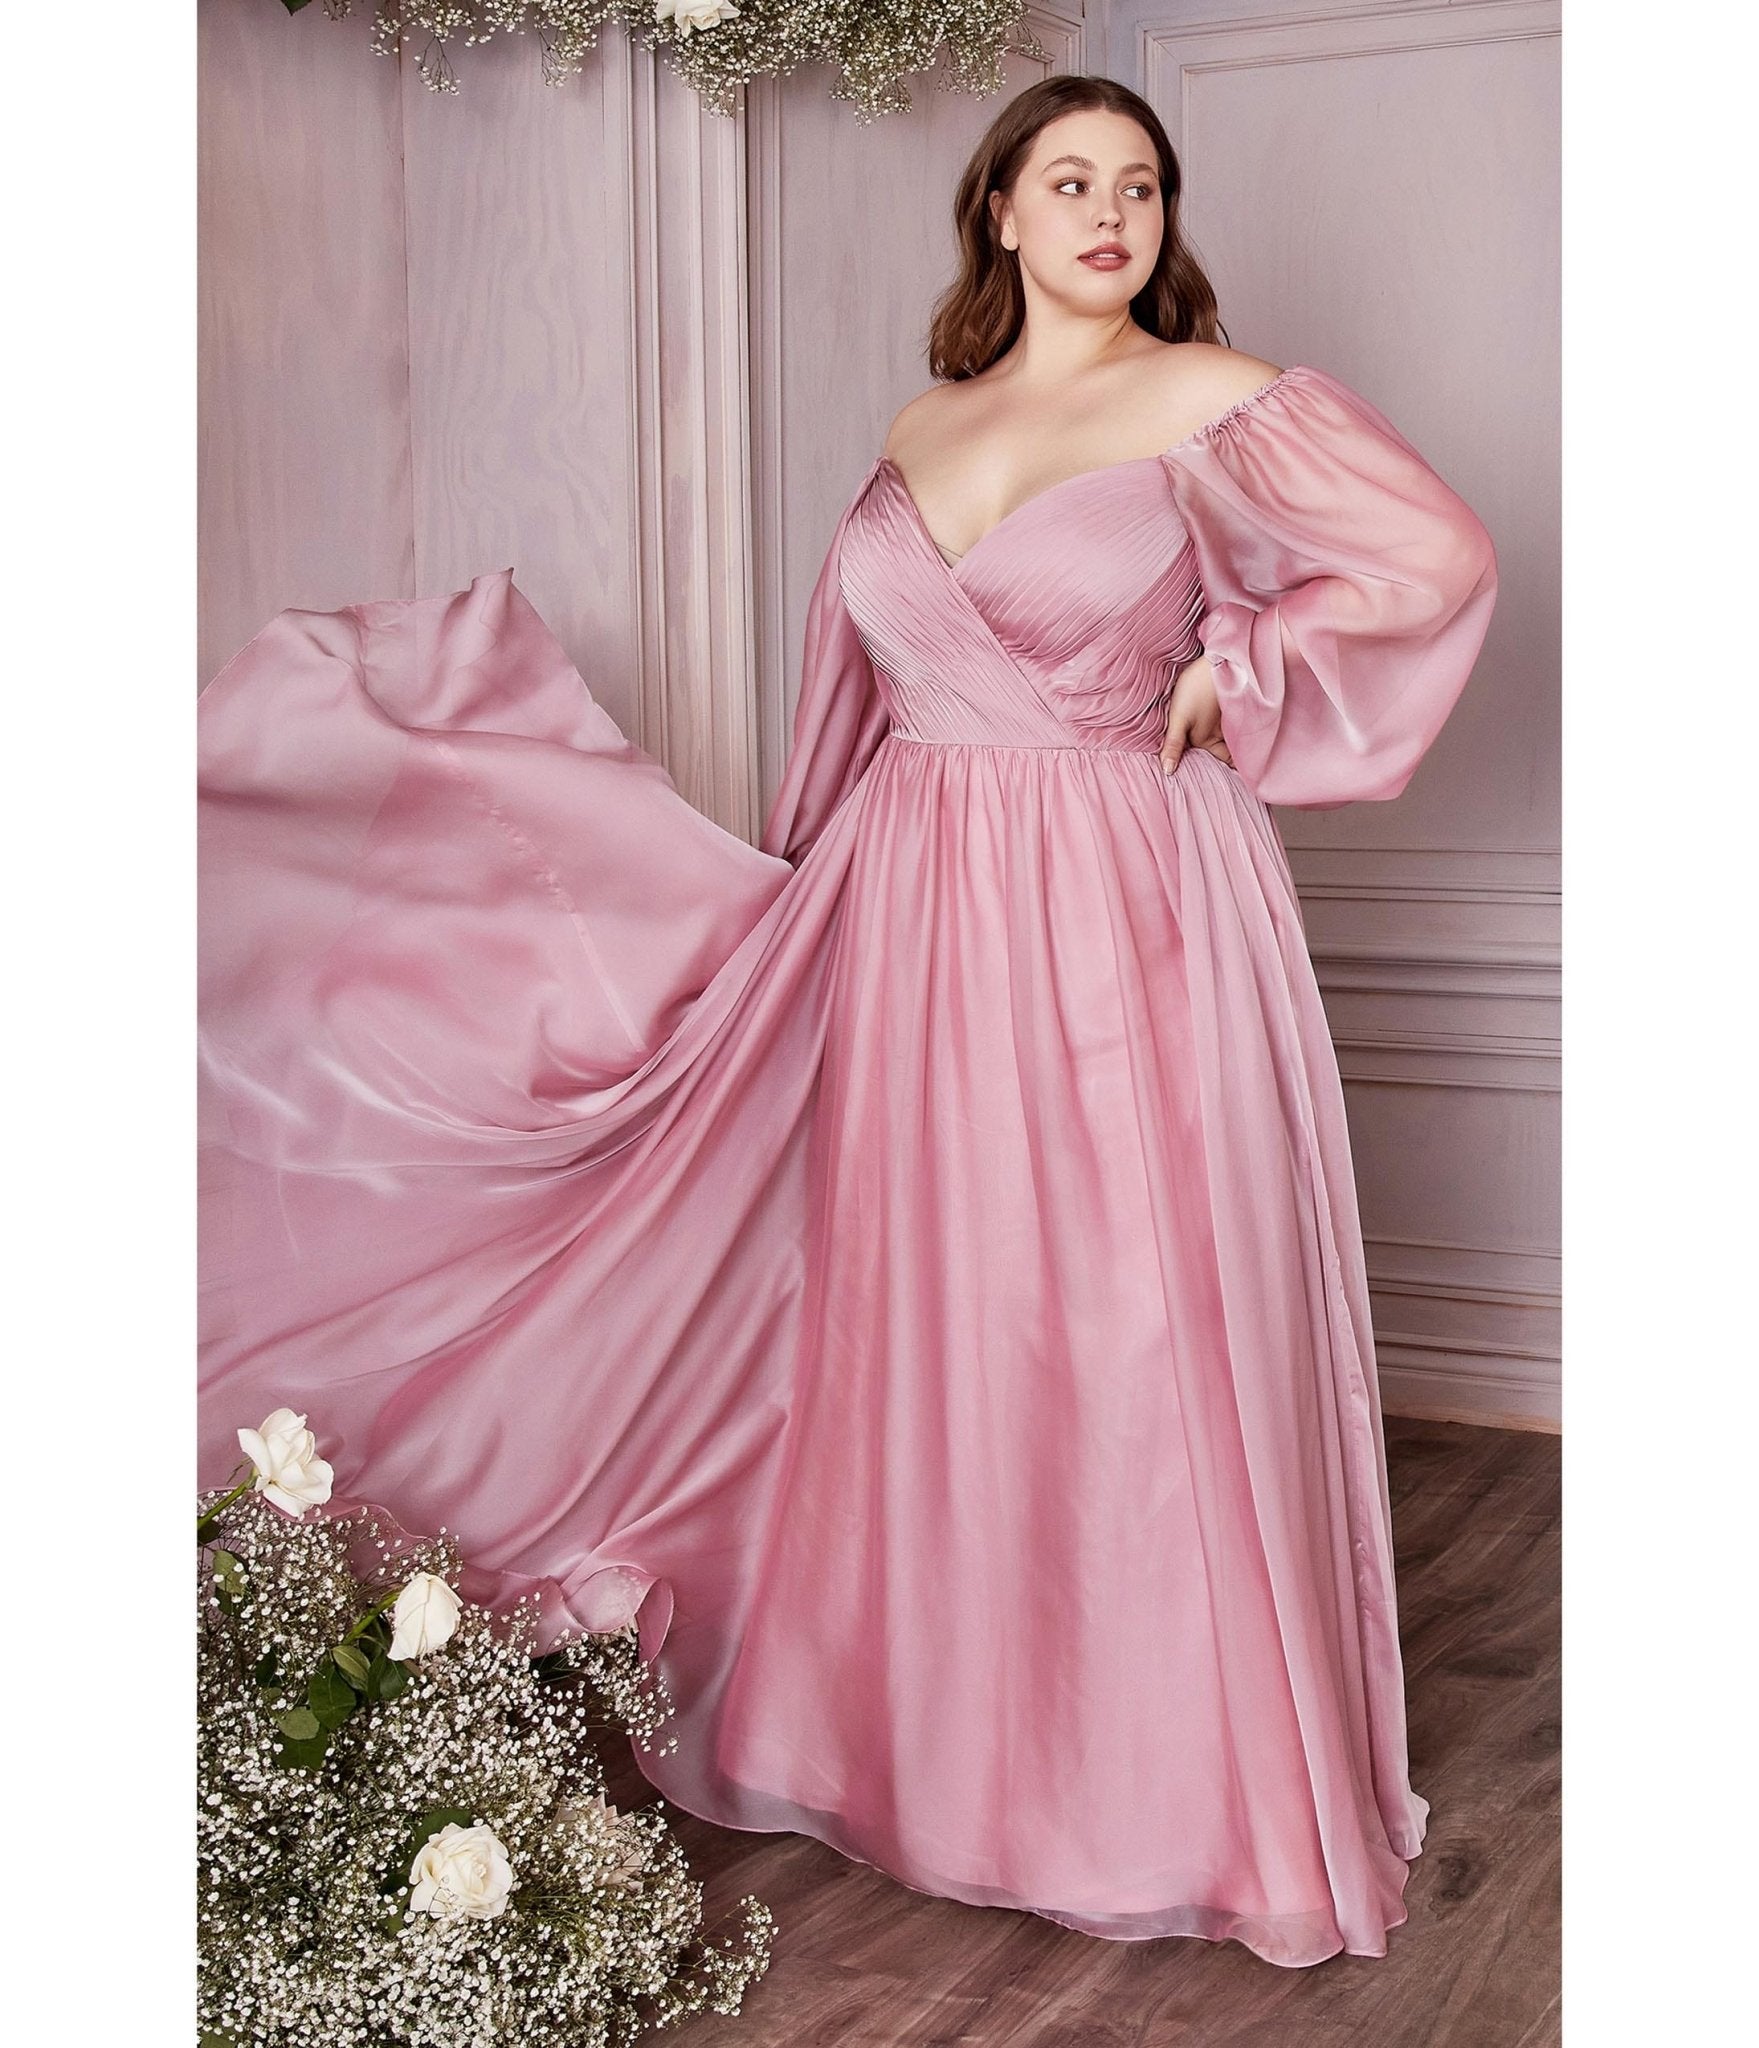 Plus Size Lace Short Dress, Blush Pink Wedding Party Gown, Bridal